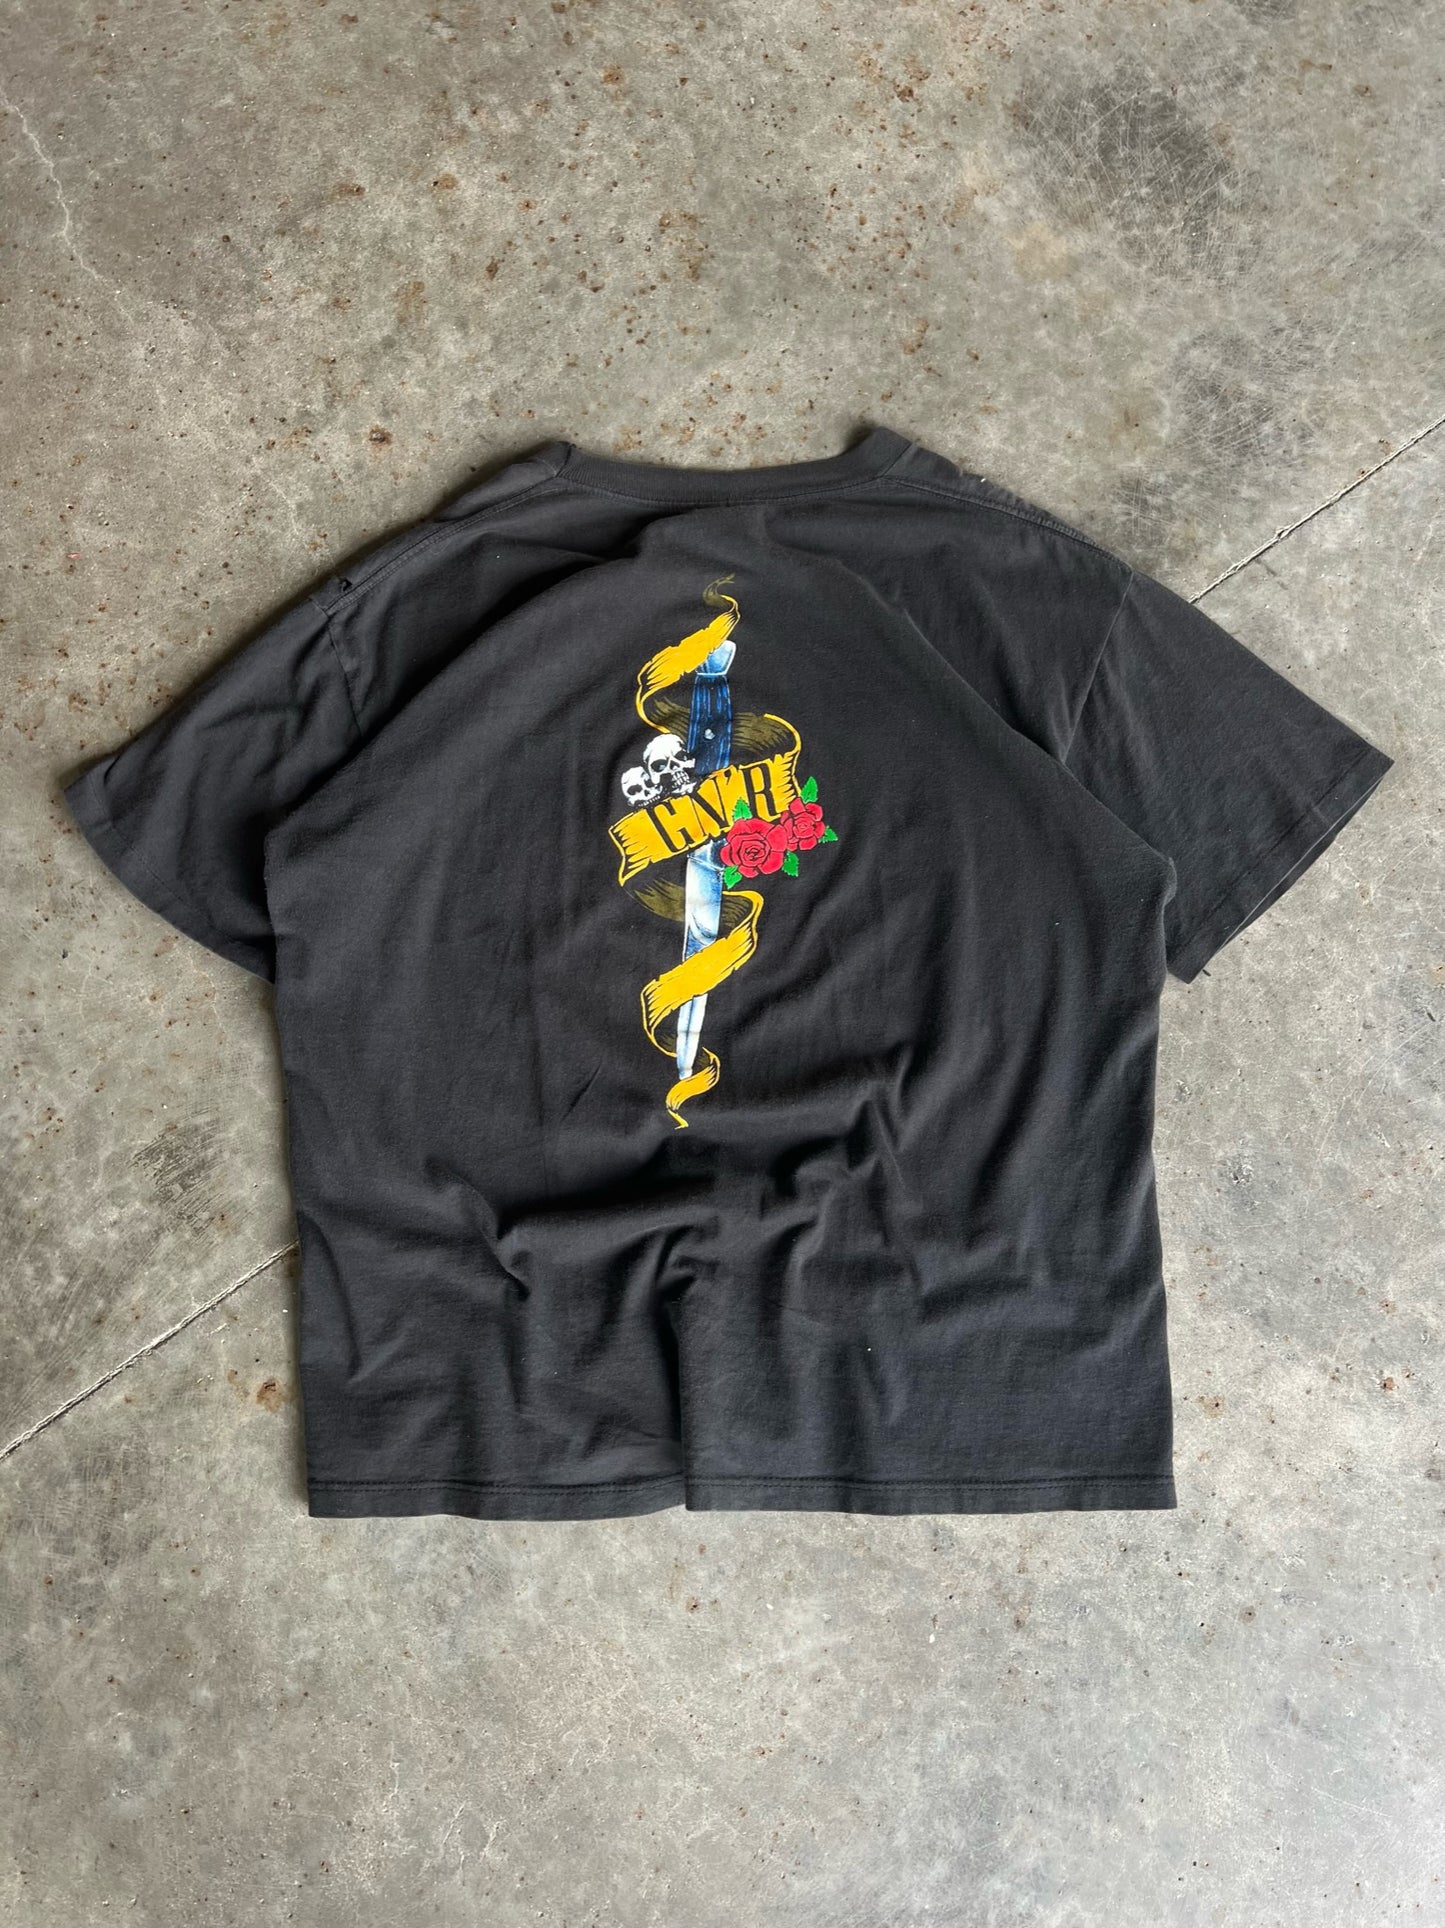 Vintage Guns-N-Roses Shirt - XL